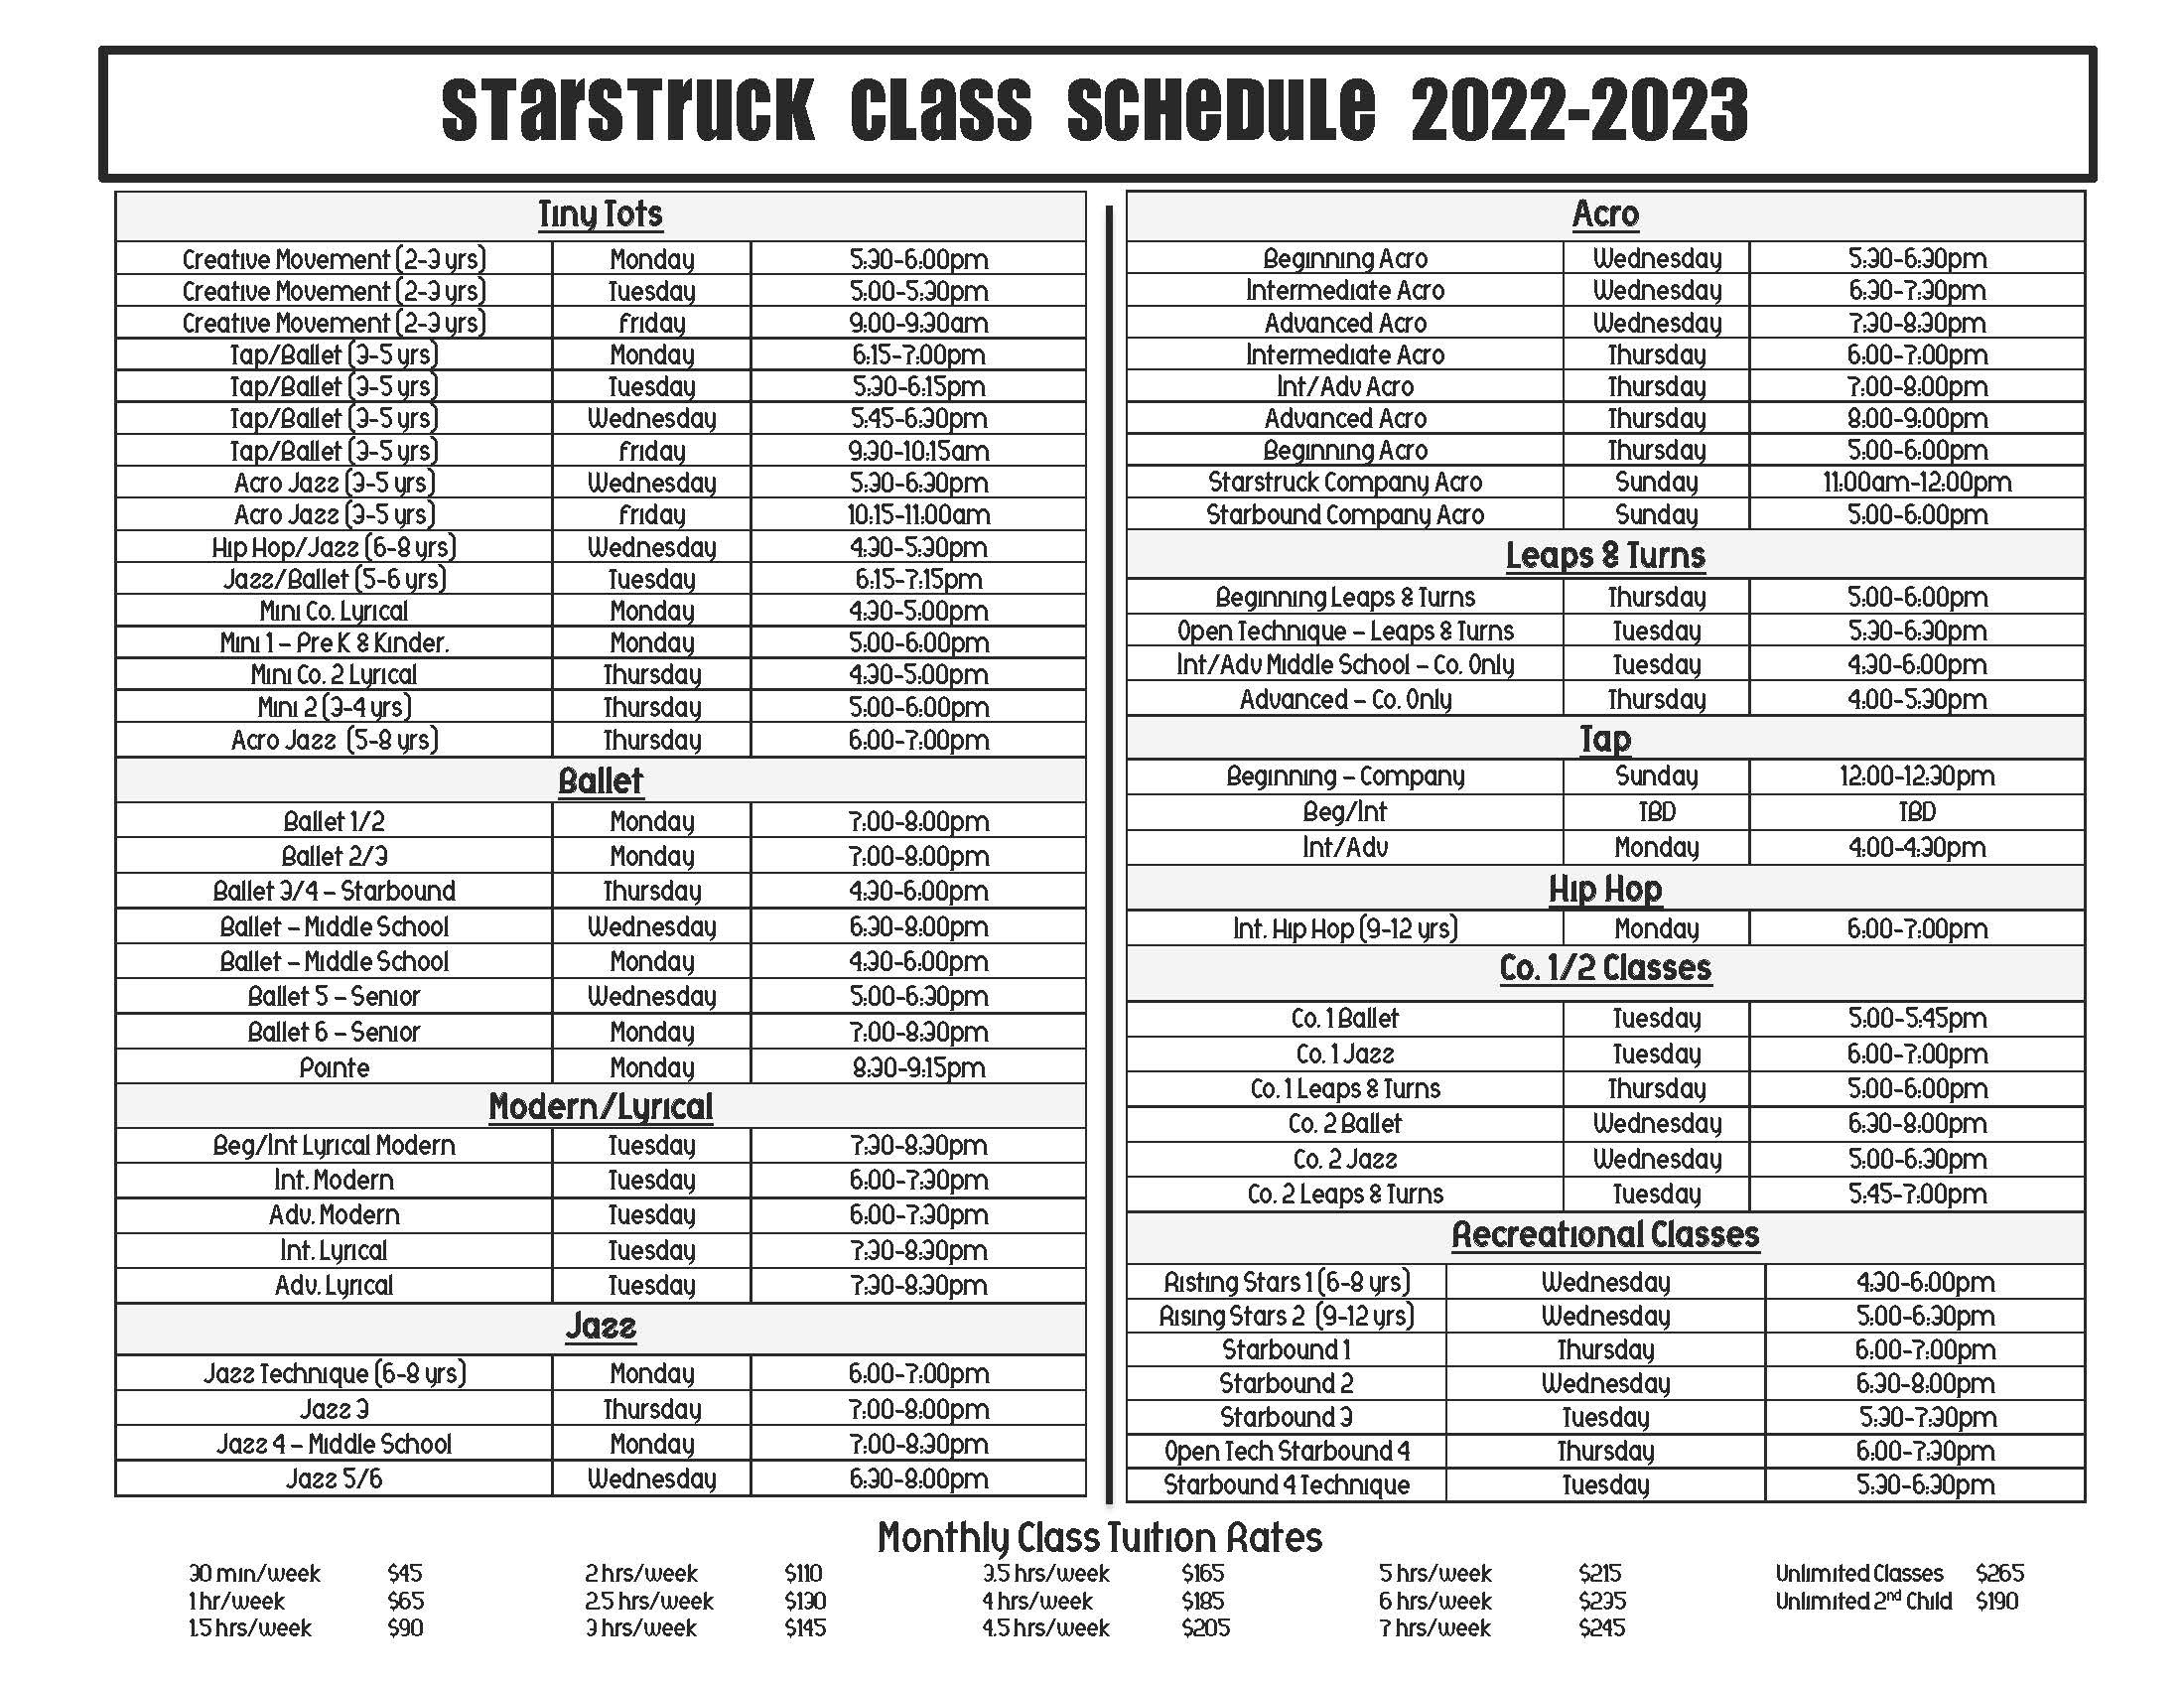 Starstruck Performing Arts Academy class schedule 2022-2023